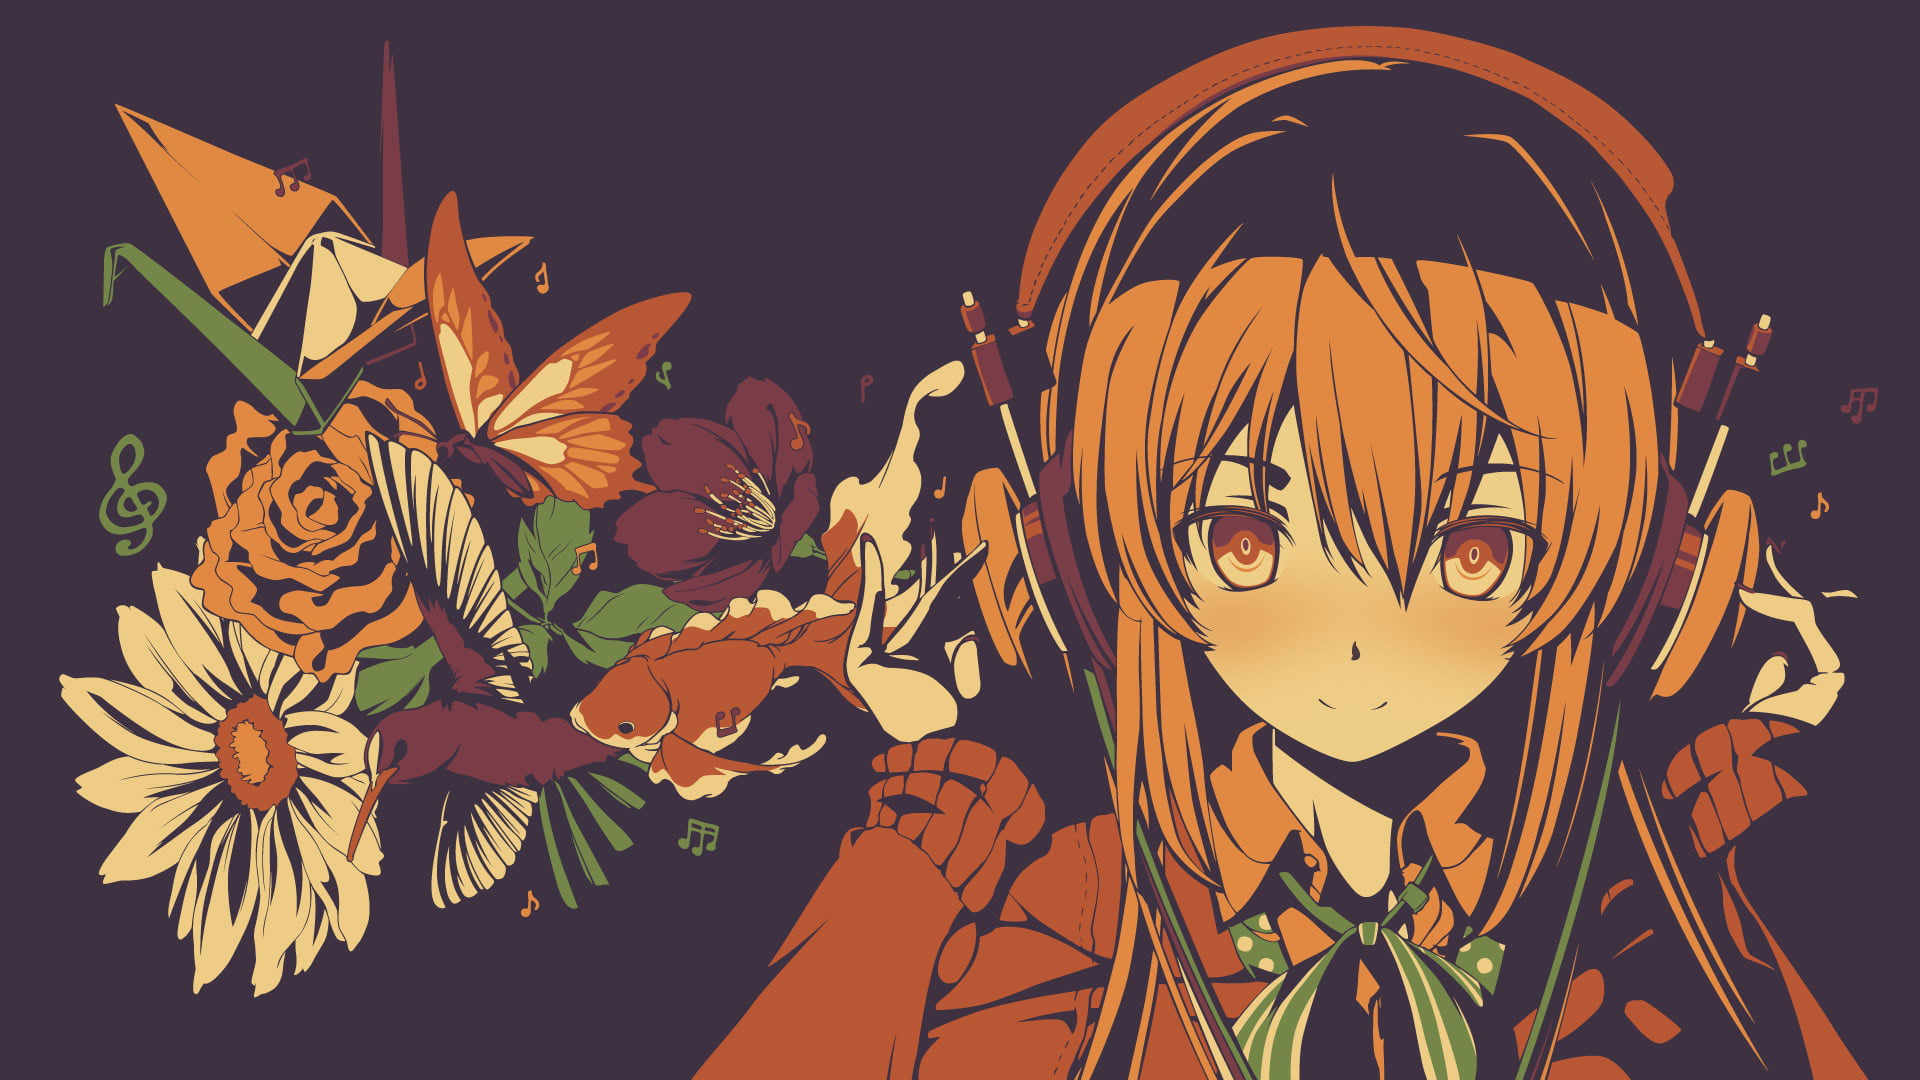 Headphones wallpaper, flowers, anime characters.